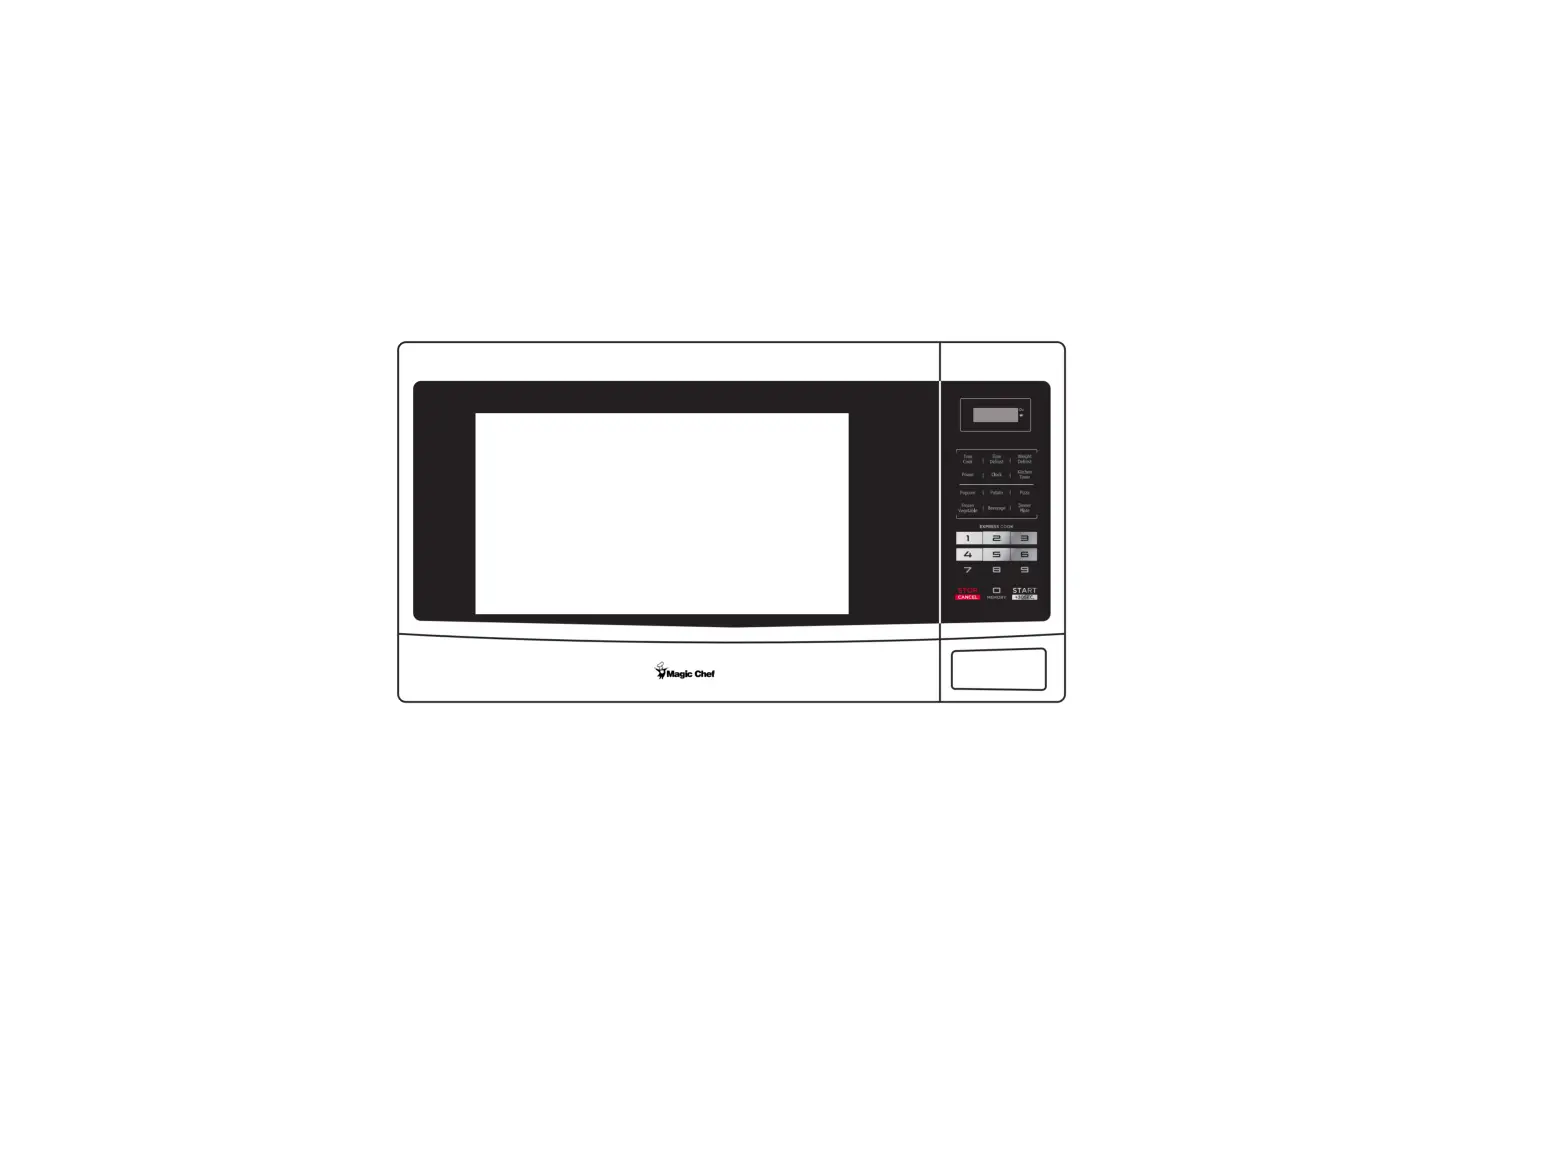 Magic Chef Countertop Microwave Oven User Manual - Manualsnap